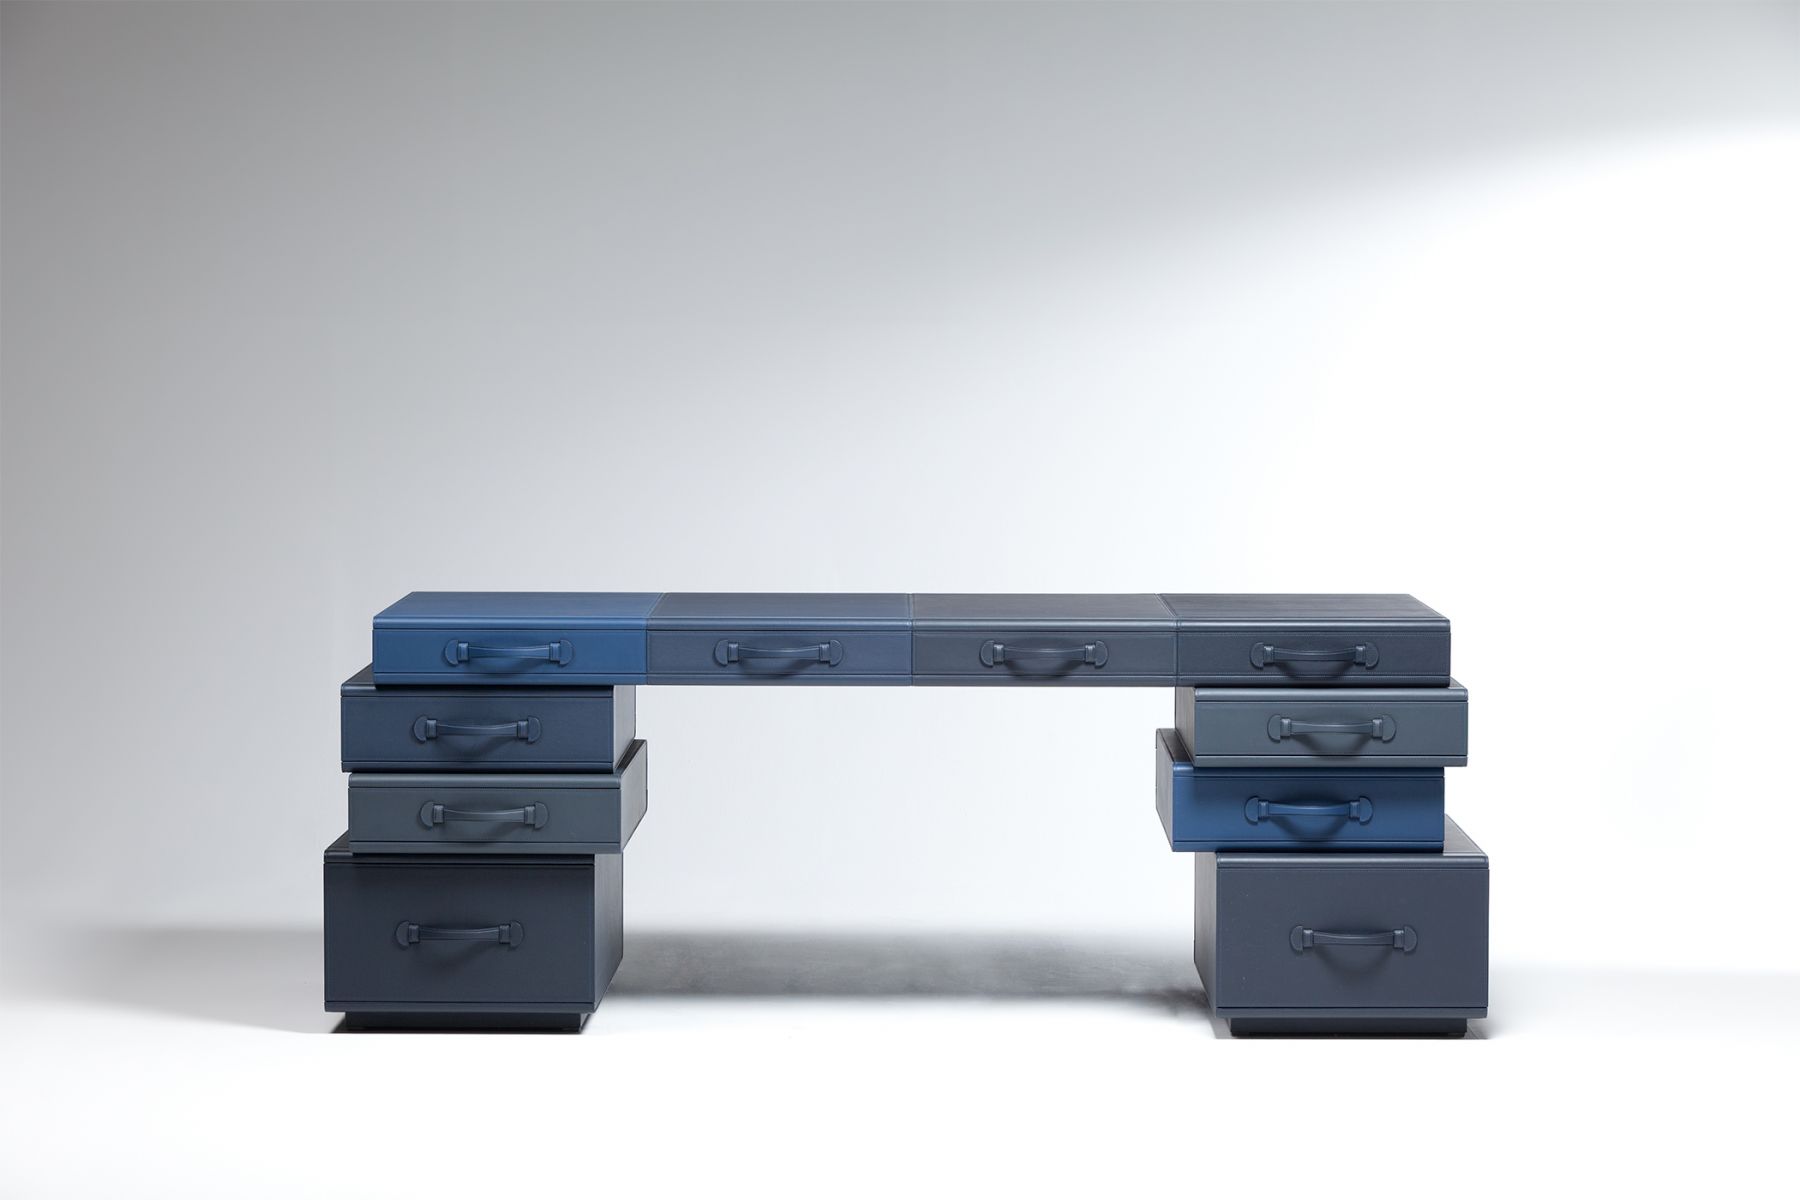 Scrivania 'Desk of briefcases' Maarten De Ceulaer pic-6